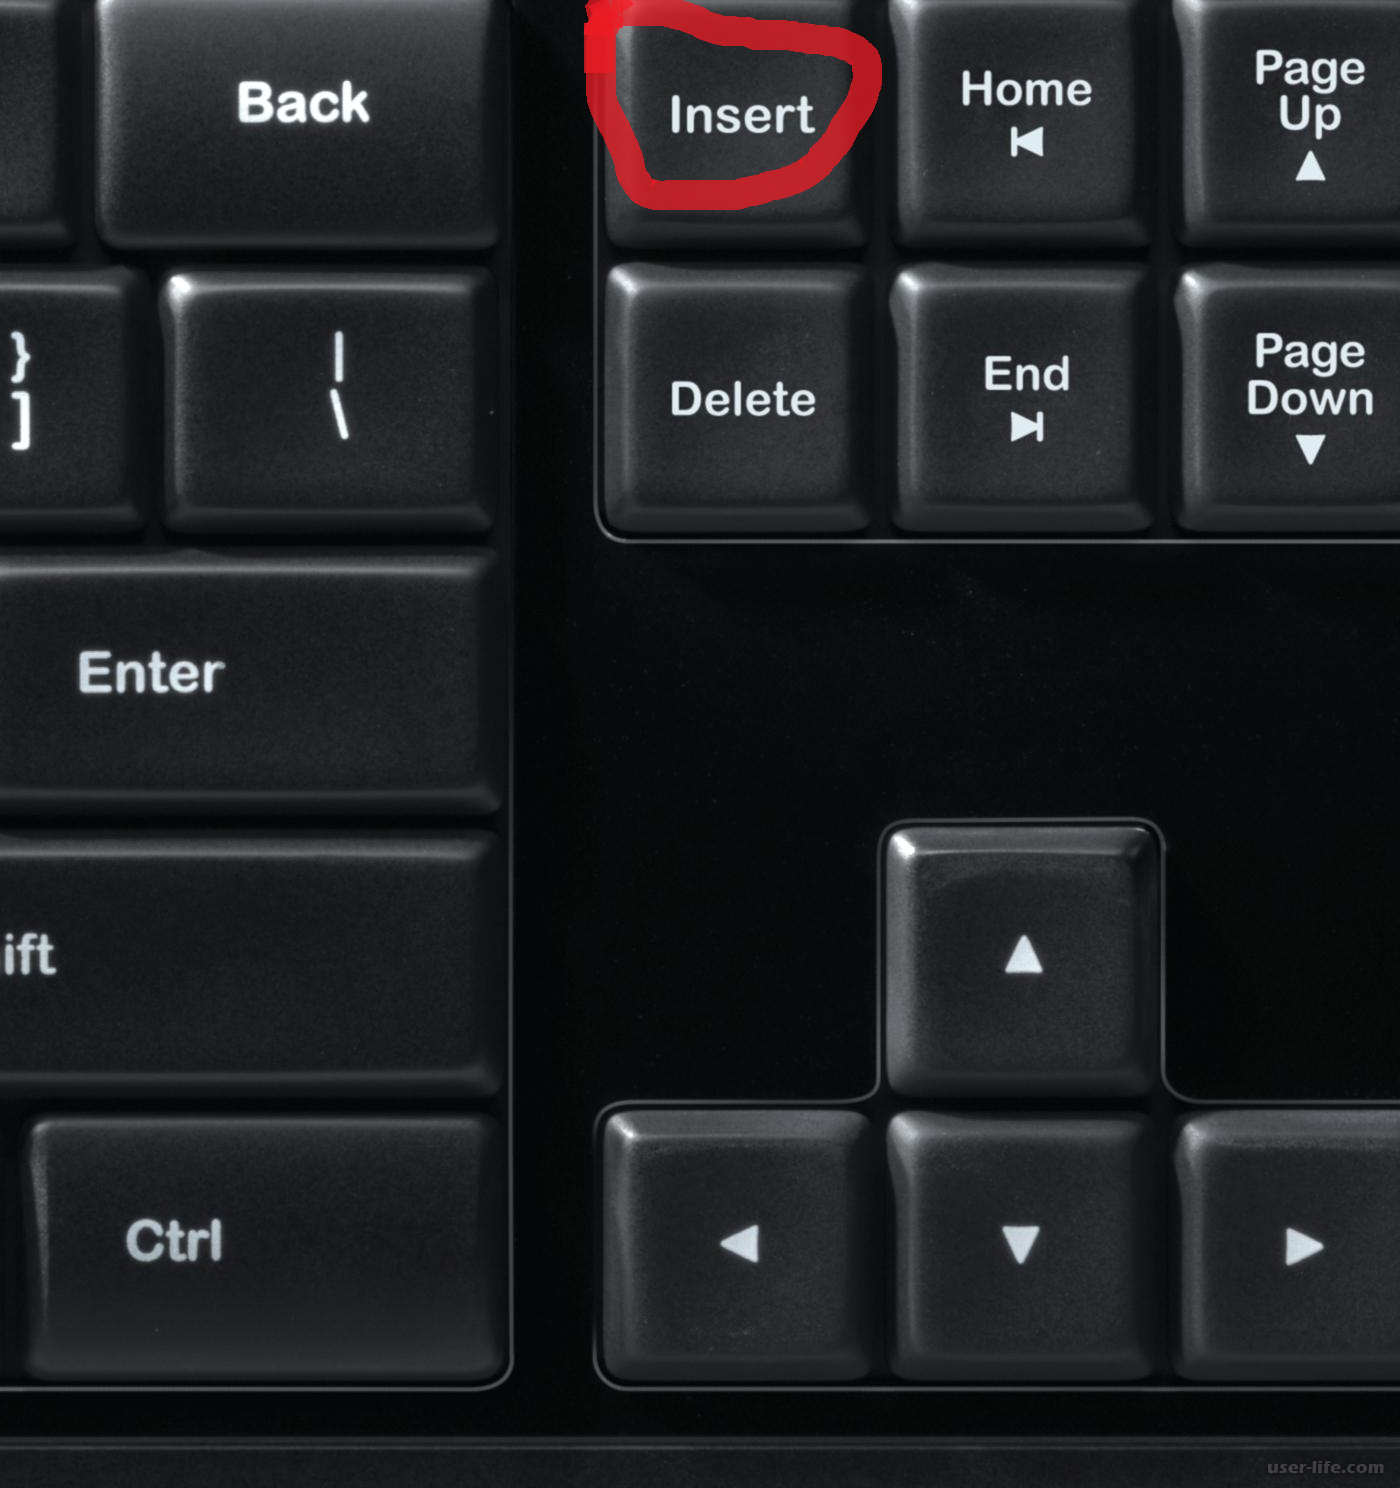 Инсерт на клавиатуре. Кнопка инсерт на клавиатуре. Клавиша Insert на клавиатуре. Кнопка Insert на клавиатуре.